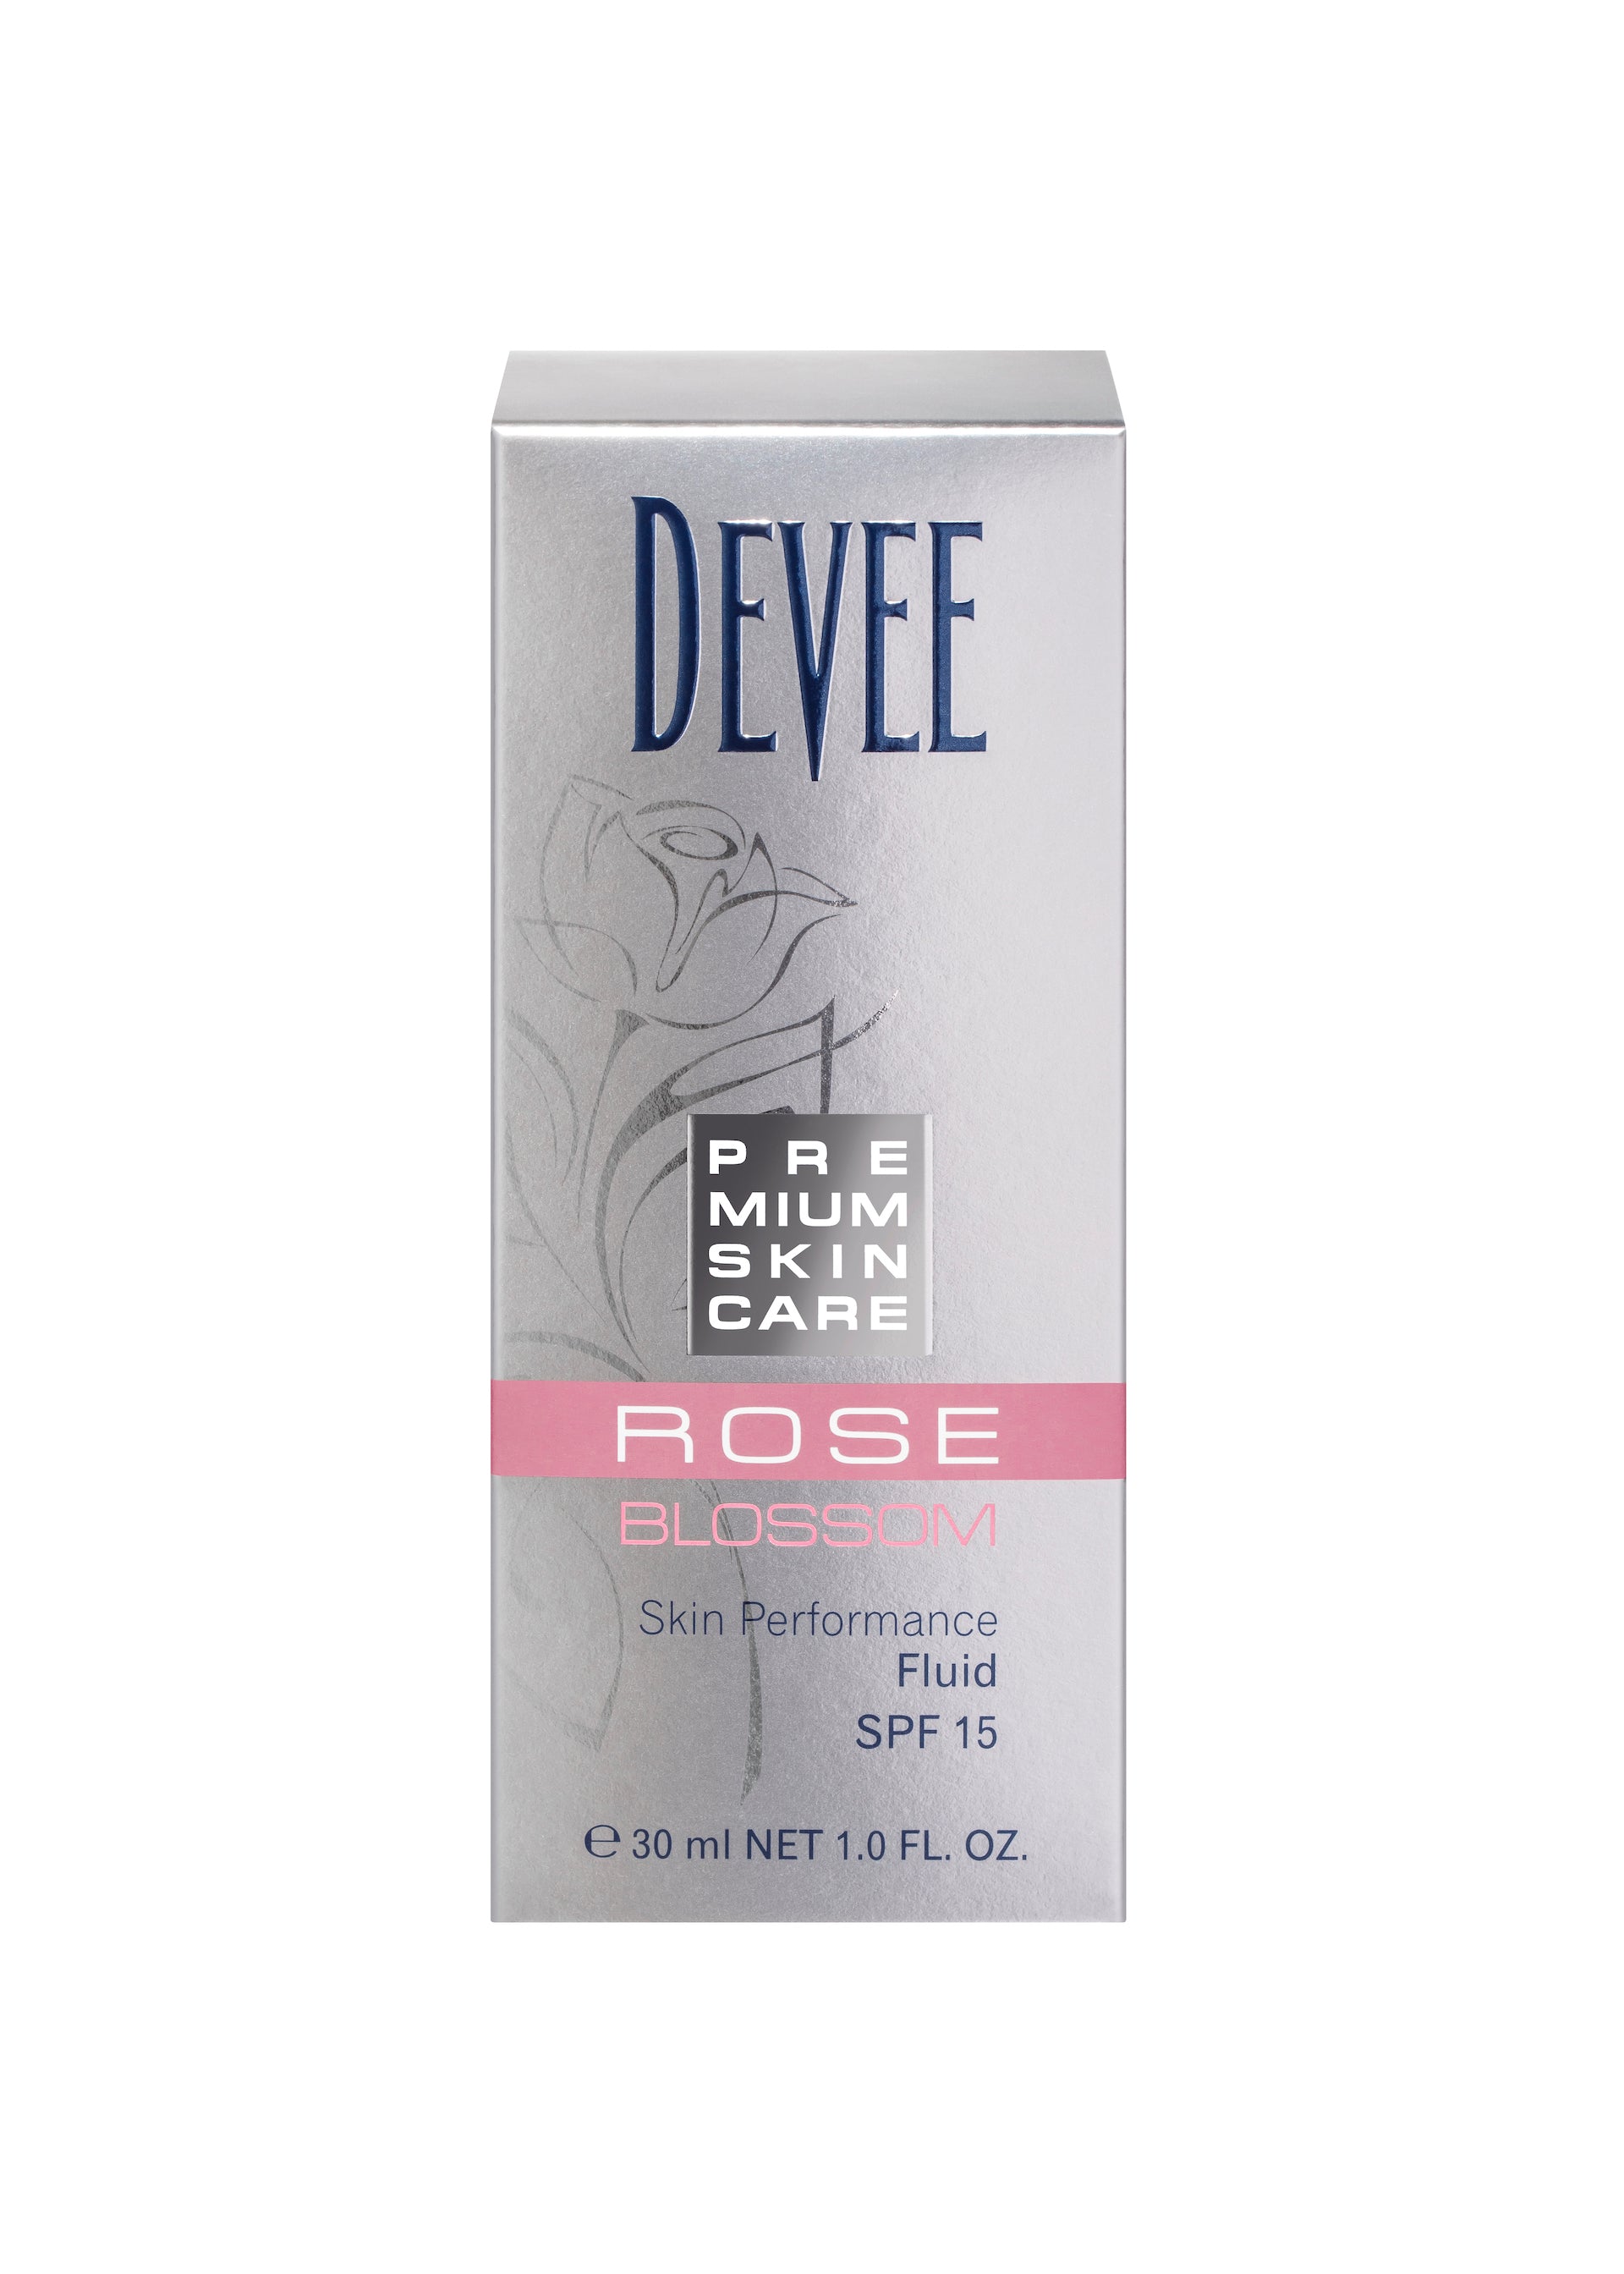 DEVEE ROSE BLOSSOM Skin Performance Fluid SPF 15 玫瑰細滑修護精華